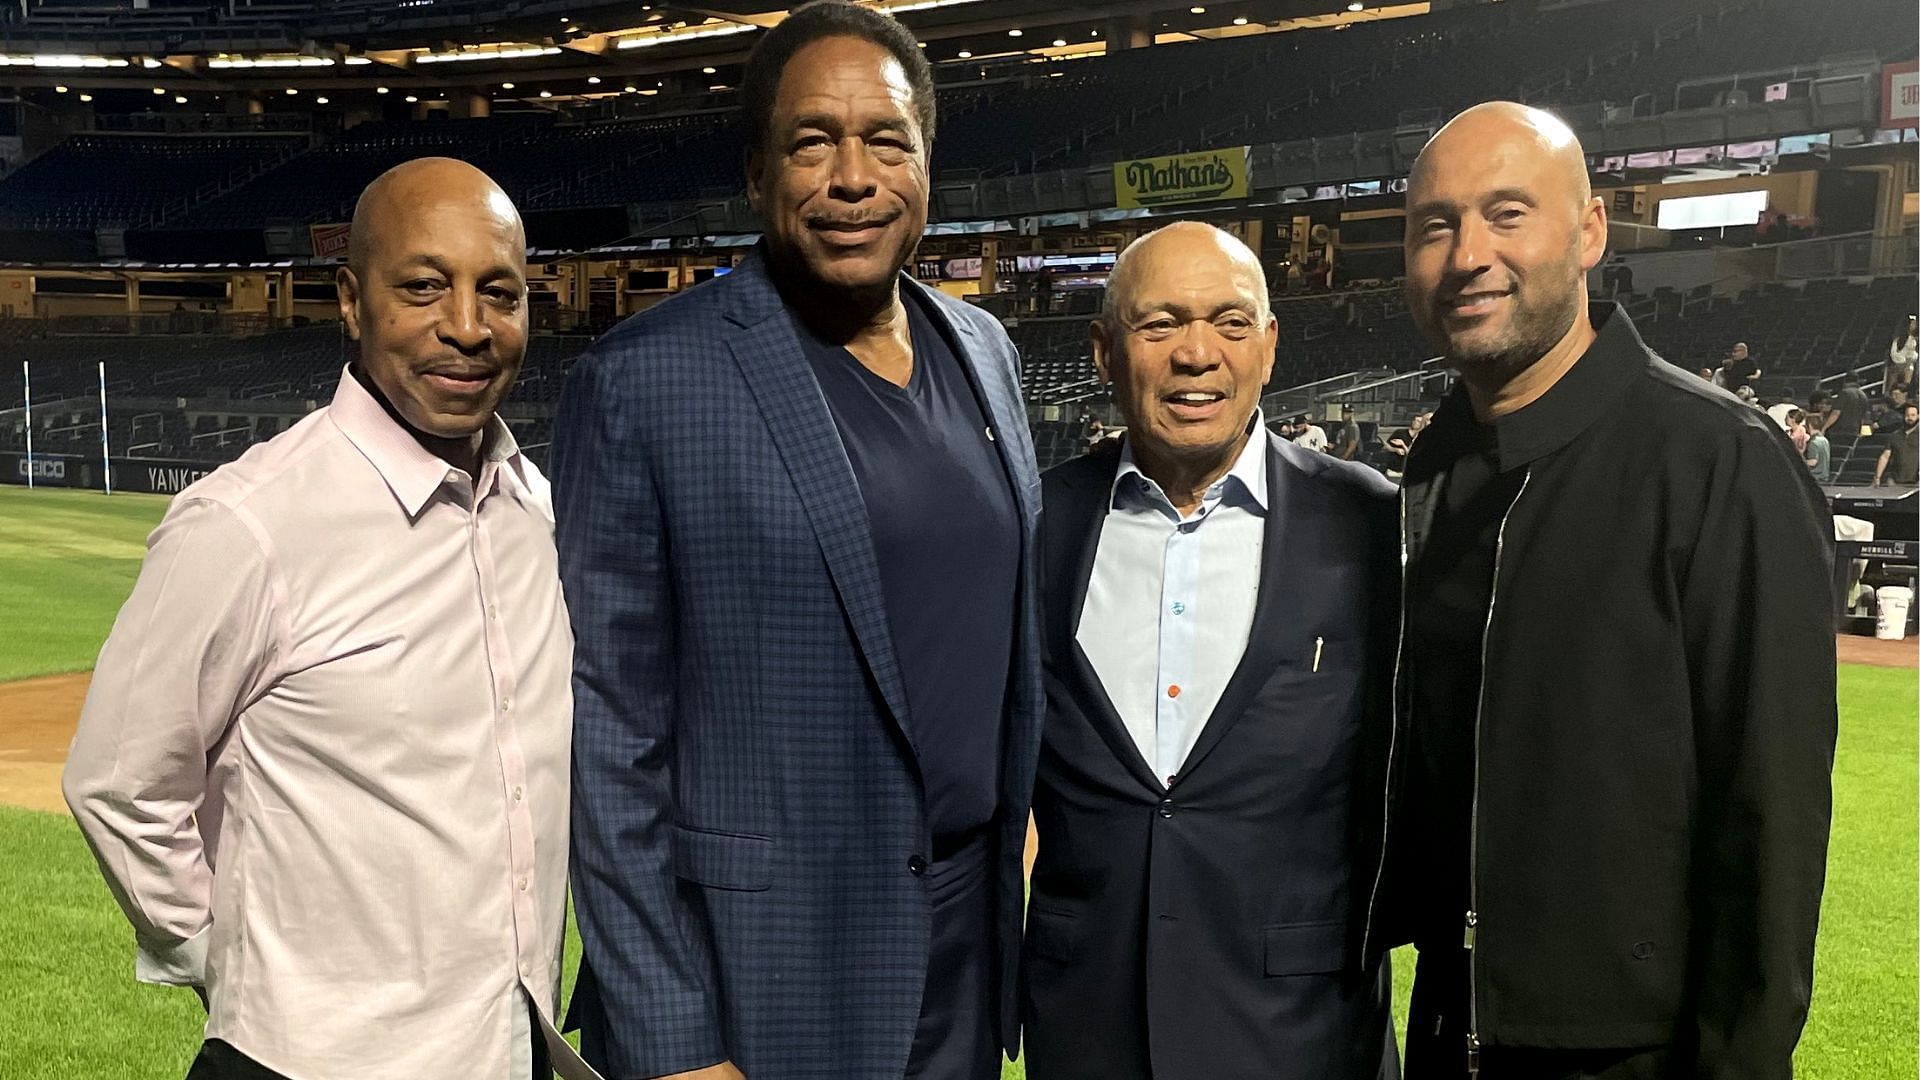 Jeter at Yankee Stadium with Reggie Jackson, Willie Randolph, and Dave Winfield